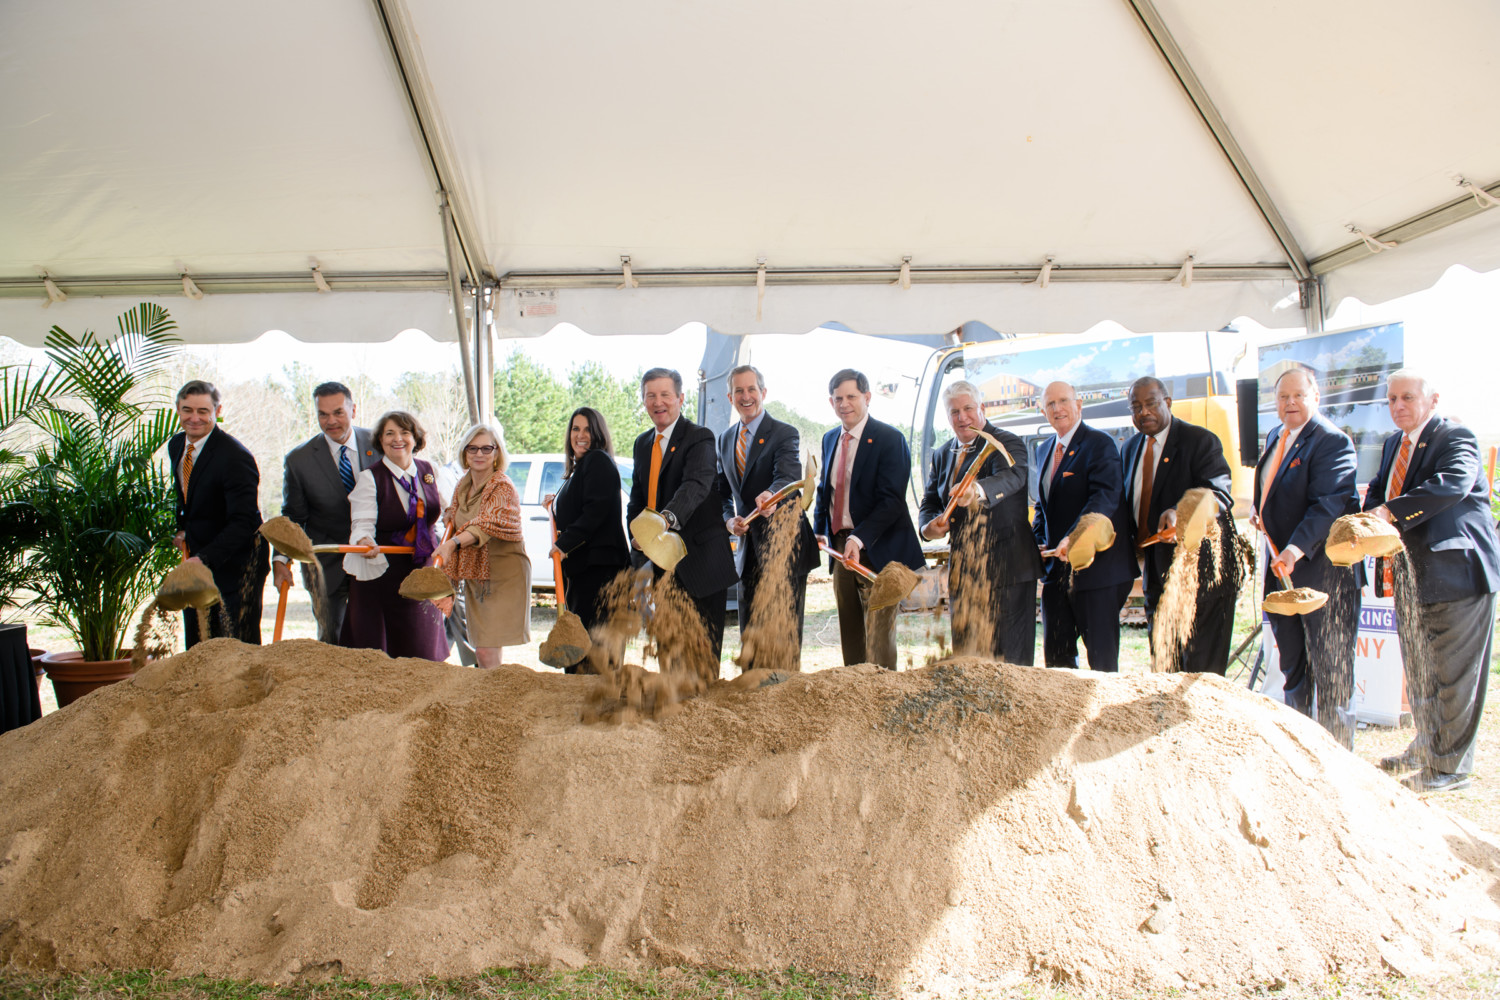 Clemson University trustees lift ceremonial shovelfuls of dirt at the groundbreaking for the Child Development Center.